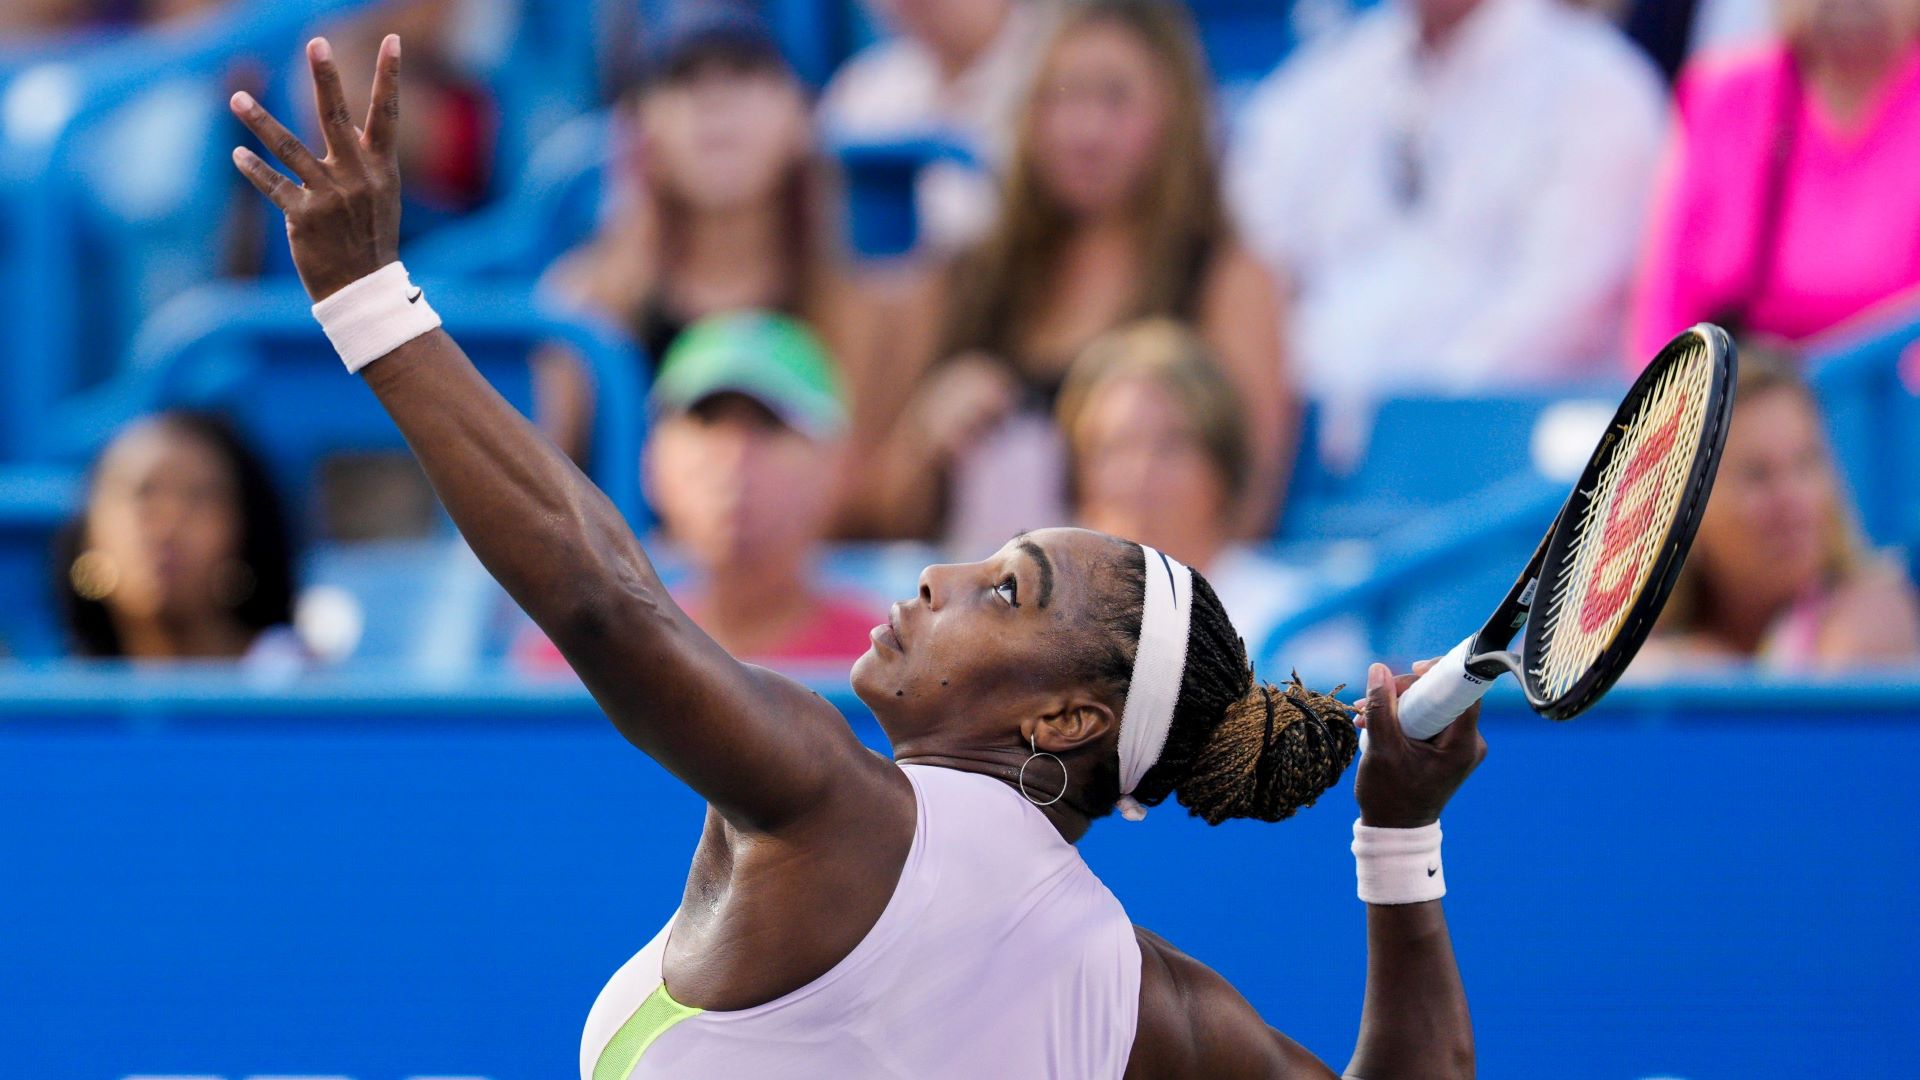 Serena Williams vs Naomi Osaka Net Worth Comparison: Who Is Richer?